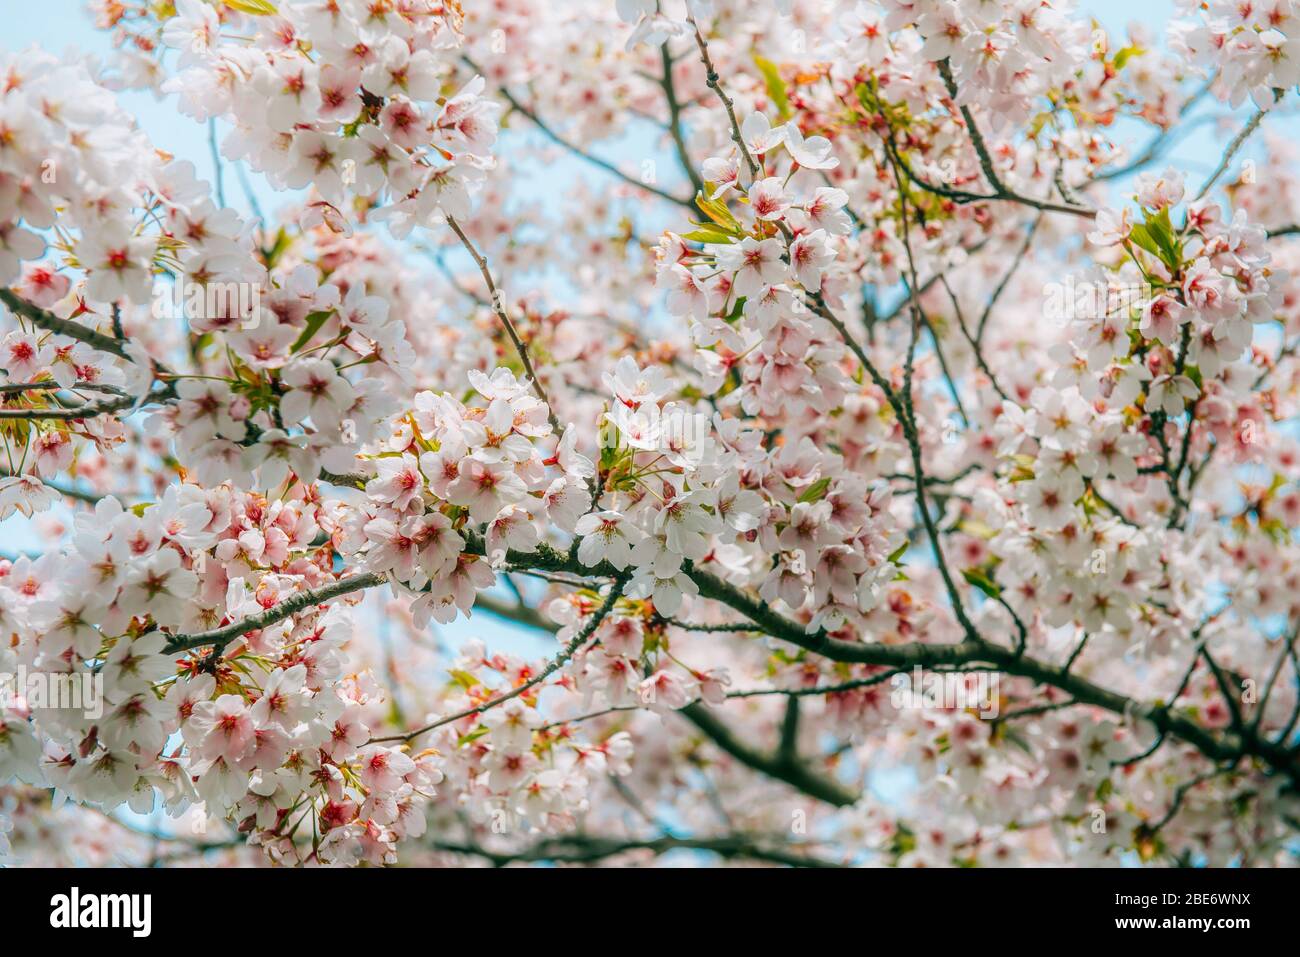 Close up detail photograph of cherry blossom (genus prunus) trees in bloom during Spring. Copenhagen, Denmark Stock Photo